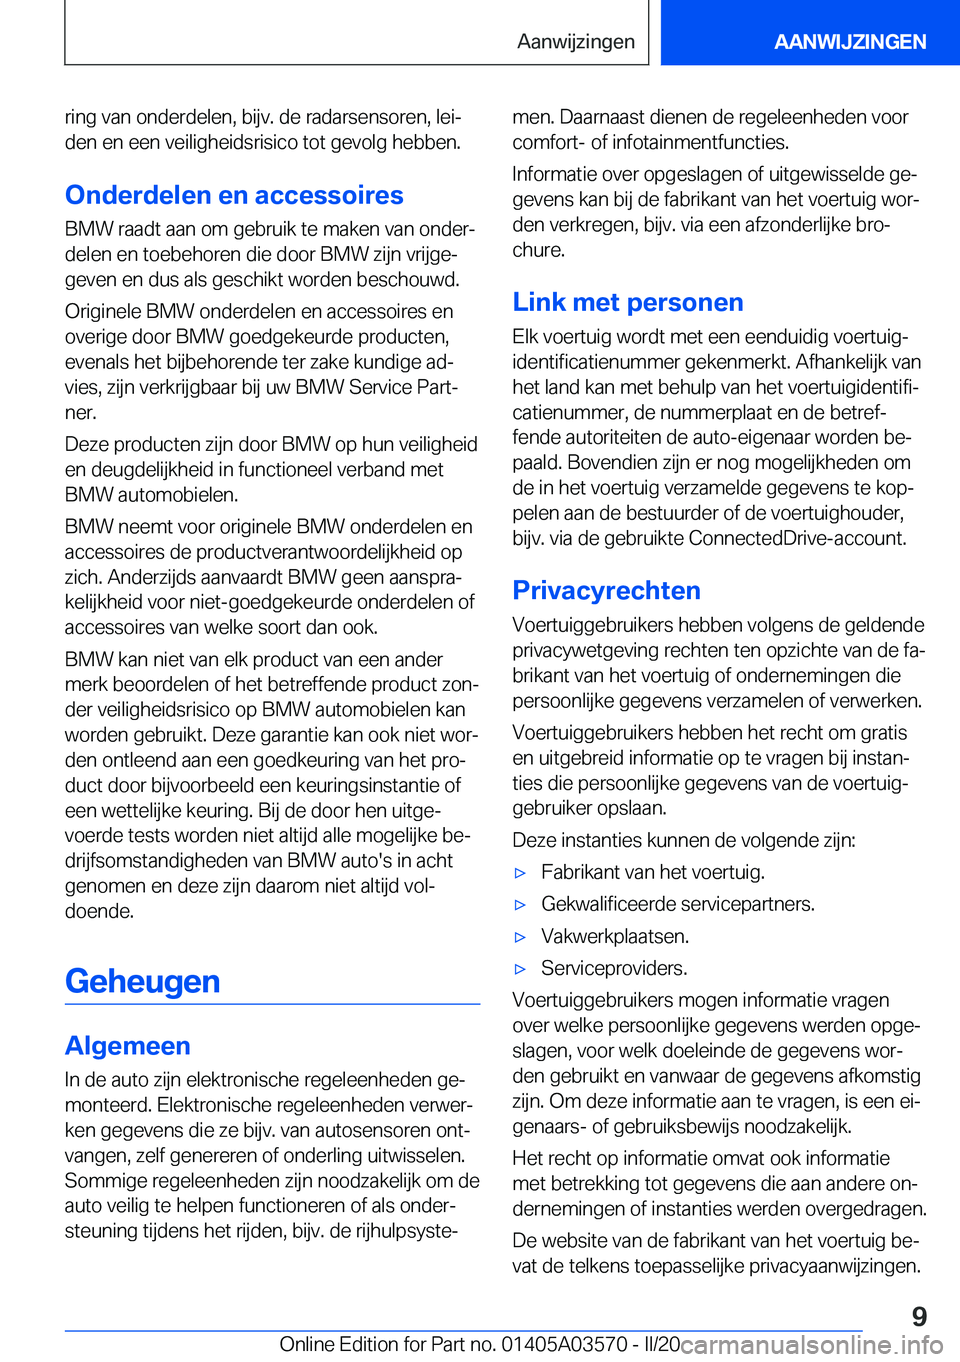 BMW X3 PLUG IN HYBRID 2020  Instructieboekjes (in Dutch) �r�i�n�g��v�a�n��o�n�d�e�r�d�e�l�e�n�,��b�i�j�v�.��d�e��r�a�d�a�r�s�e�n�s�o�r�e�n�,��l�e�ij�d�e�n��e�n��e�e�n��v�e�i�l�i�g�h�e�i�d�s�r�i�s�i�c�o��t�o�t��g�e�v�o�l�g��h�e�b�b�e�n�.
�O�n�d�